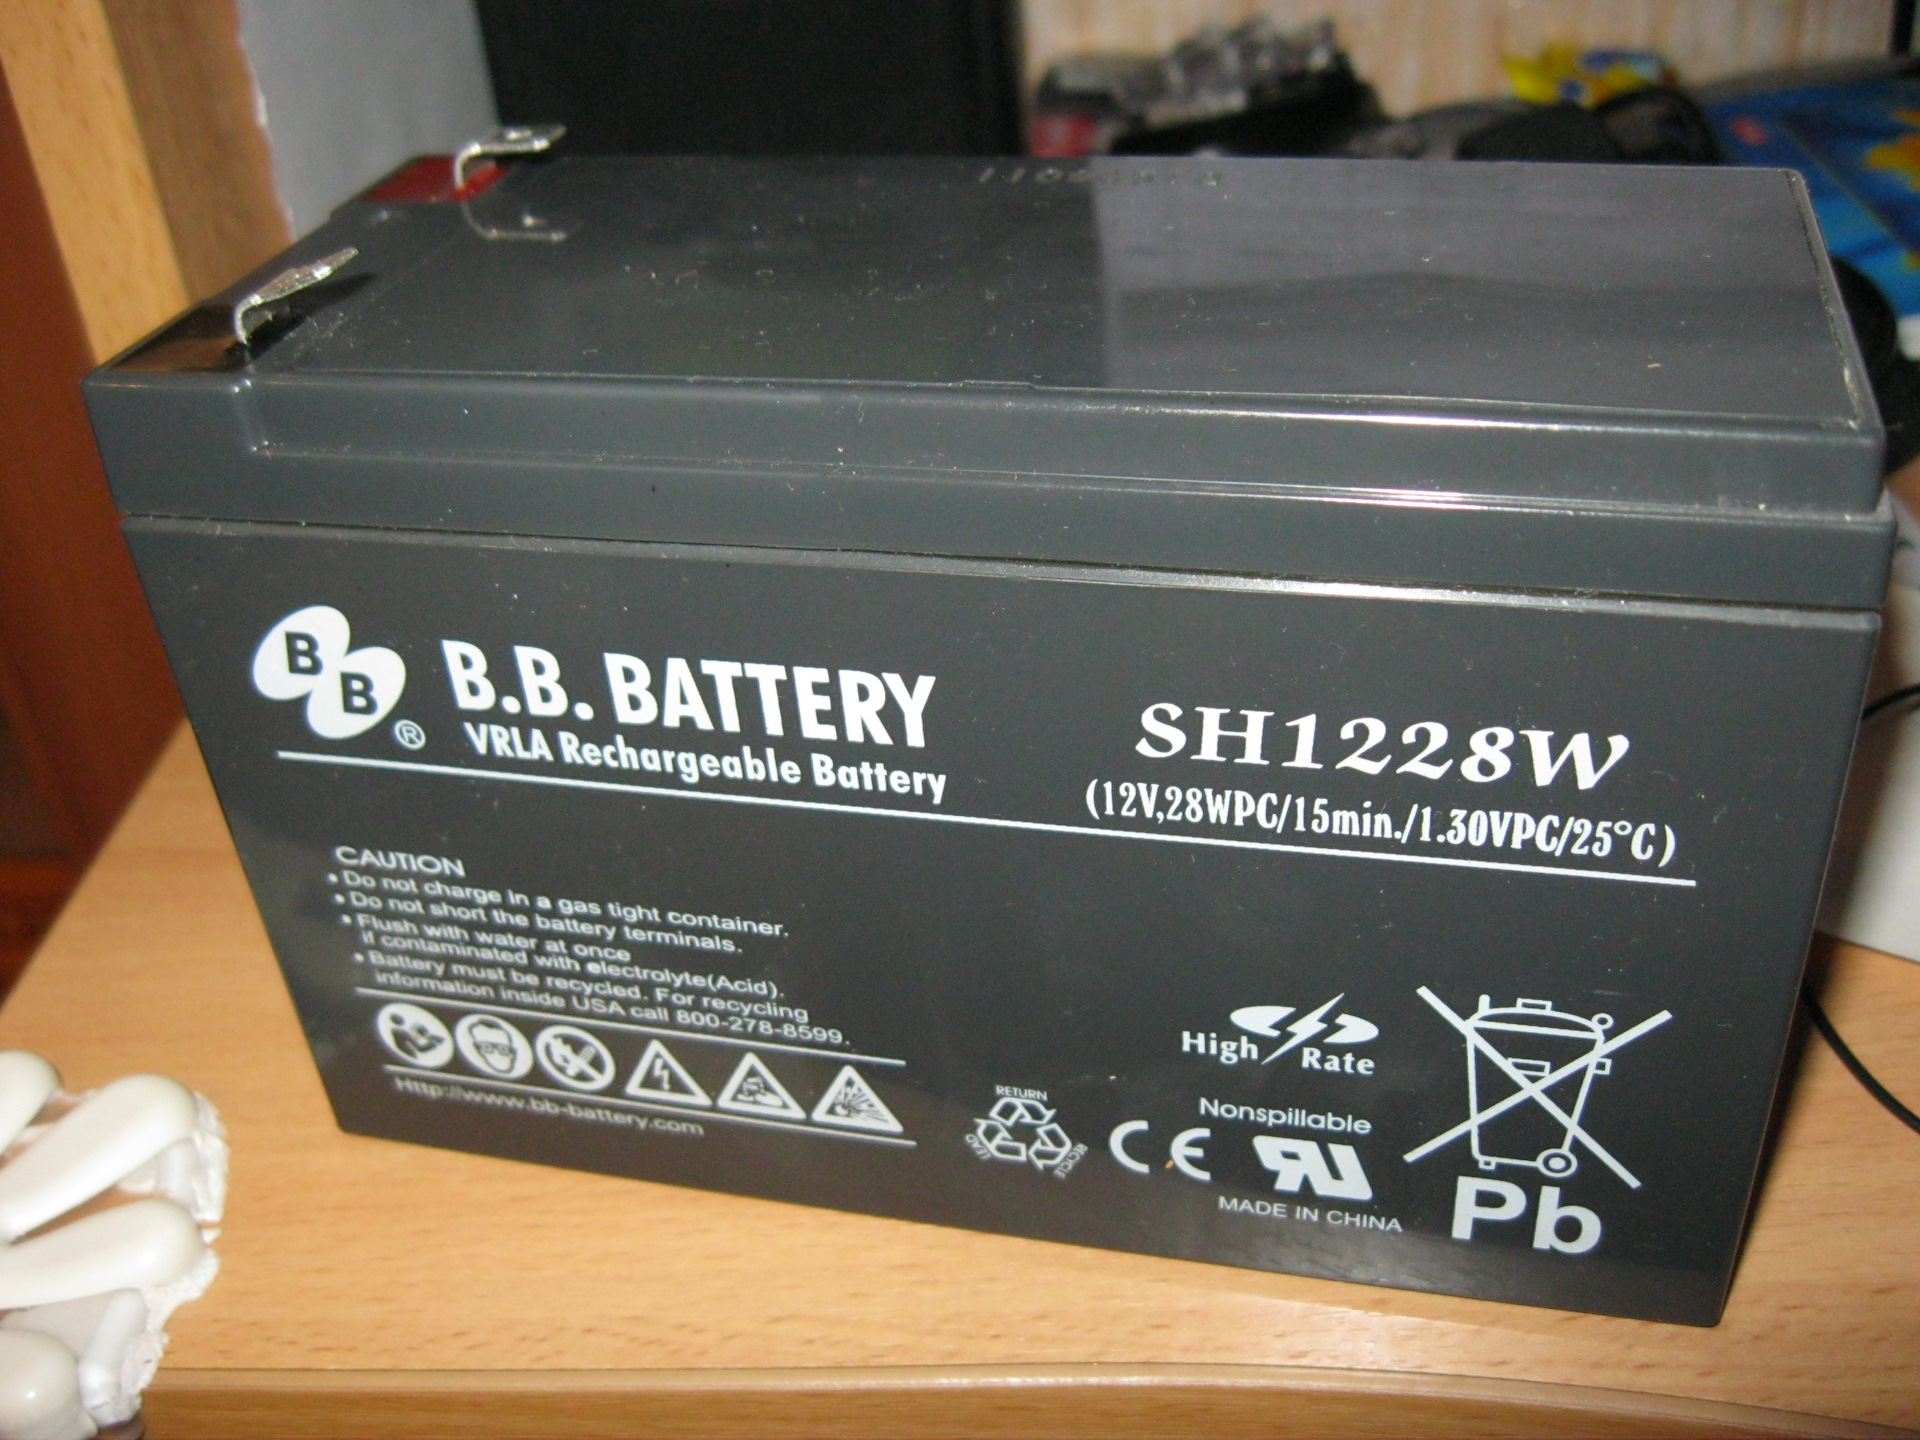 W battery. Аккумулятор BB Battery sh1228w. Аккумулятор sh1228w 12v b.b.Battery 28wpc/15min/1.0VPC/25. Аккумулятор b.b. Battery sh1228w s. Sh1228w аккумулятор для ИБП.